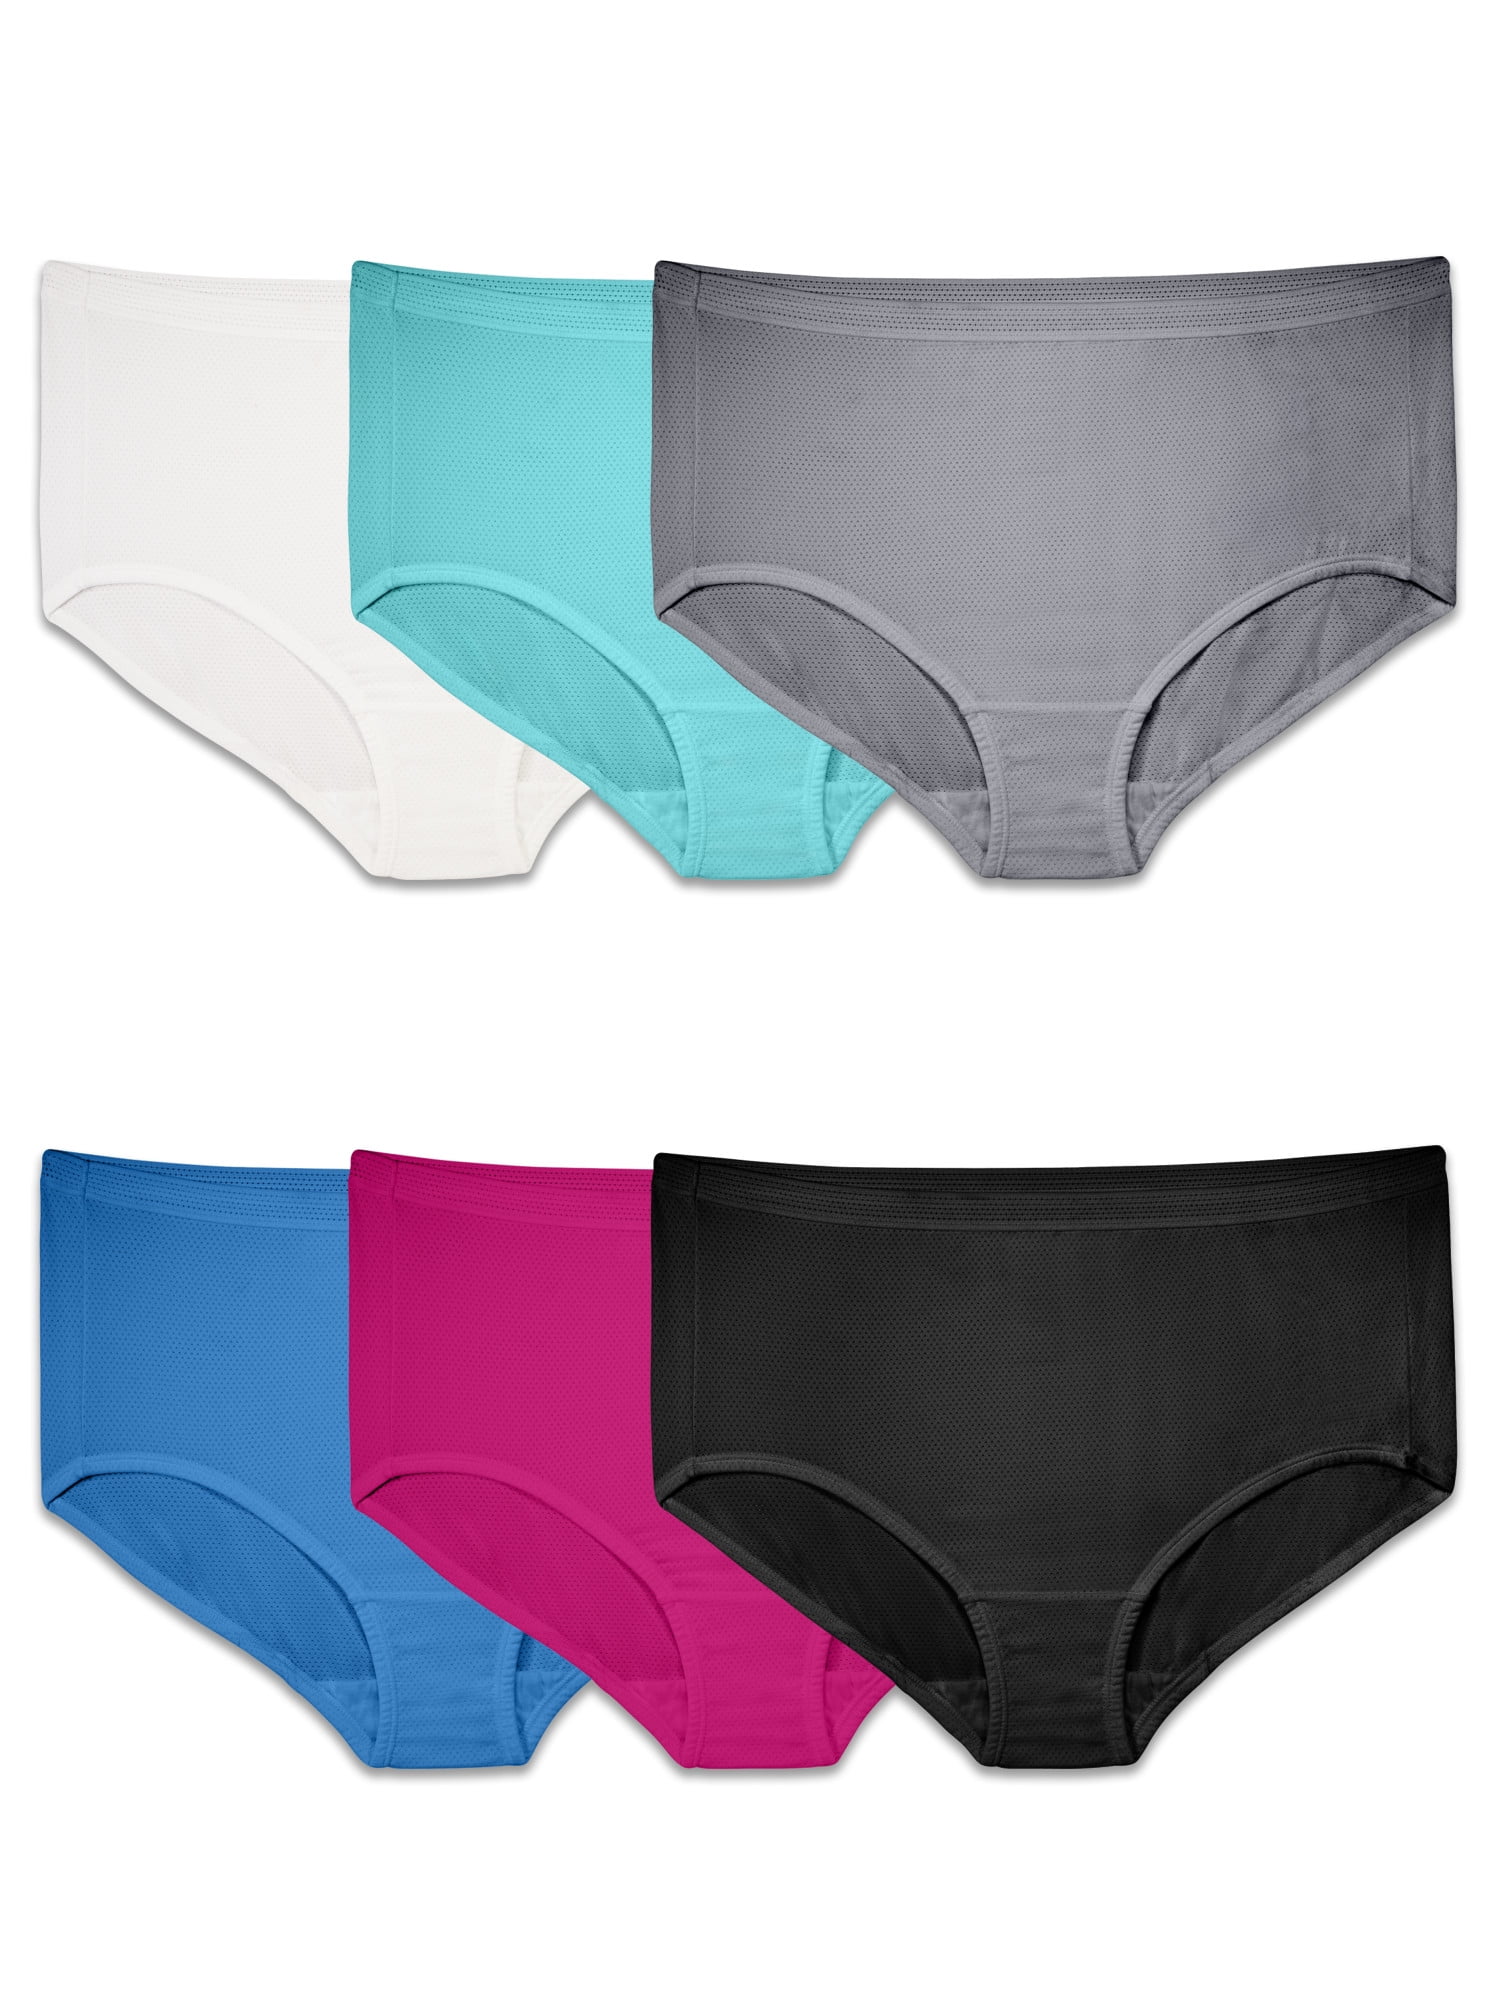 Girl's Breathable Micro-Mesh Brief Underwear, Assorted 6+1 Bonus Pack